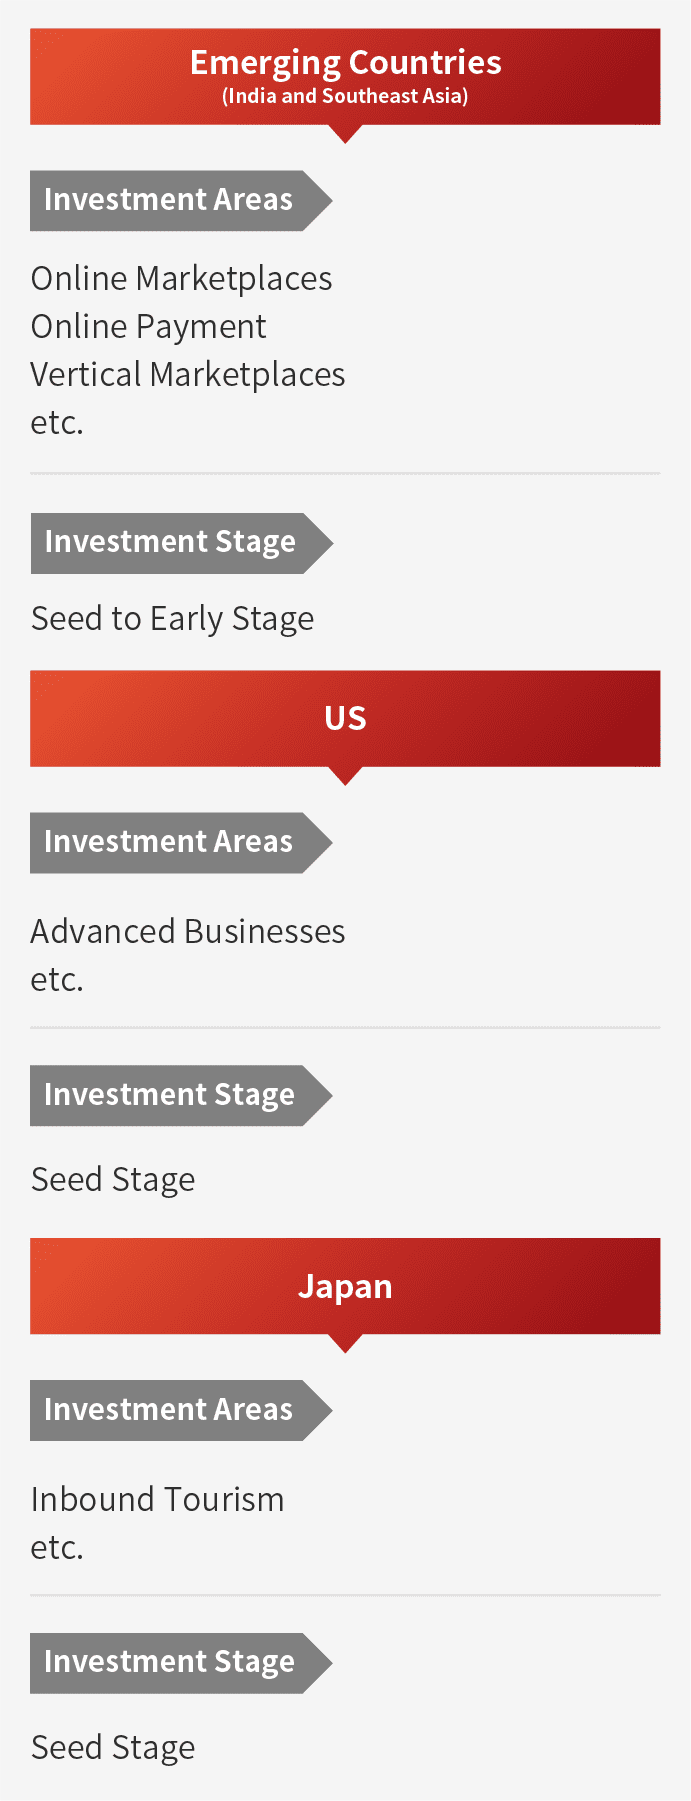 Investment Areas 新興国（インド・東南アジアなど） Online MarketplacesOnline PaymentVertical Marketplacesetc. アメリカ Advanced Businessesetc. 日本 Inbound Tourismetc. Investment Stage 新興国（インド・東南アジアなど） Seed to Early Stage アメリカ Seed Stage 日本 Seed Stage